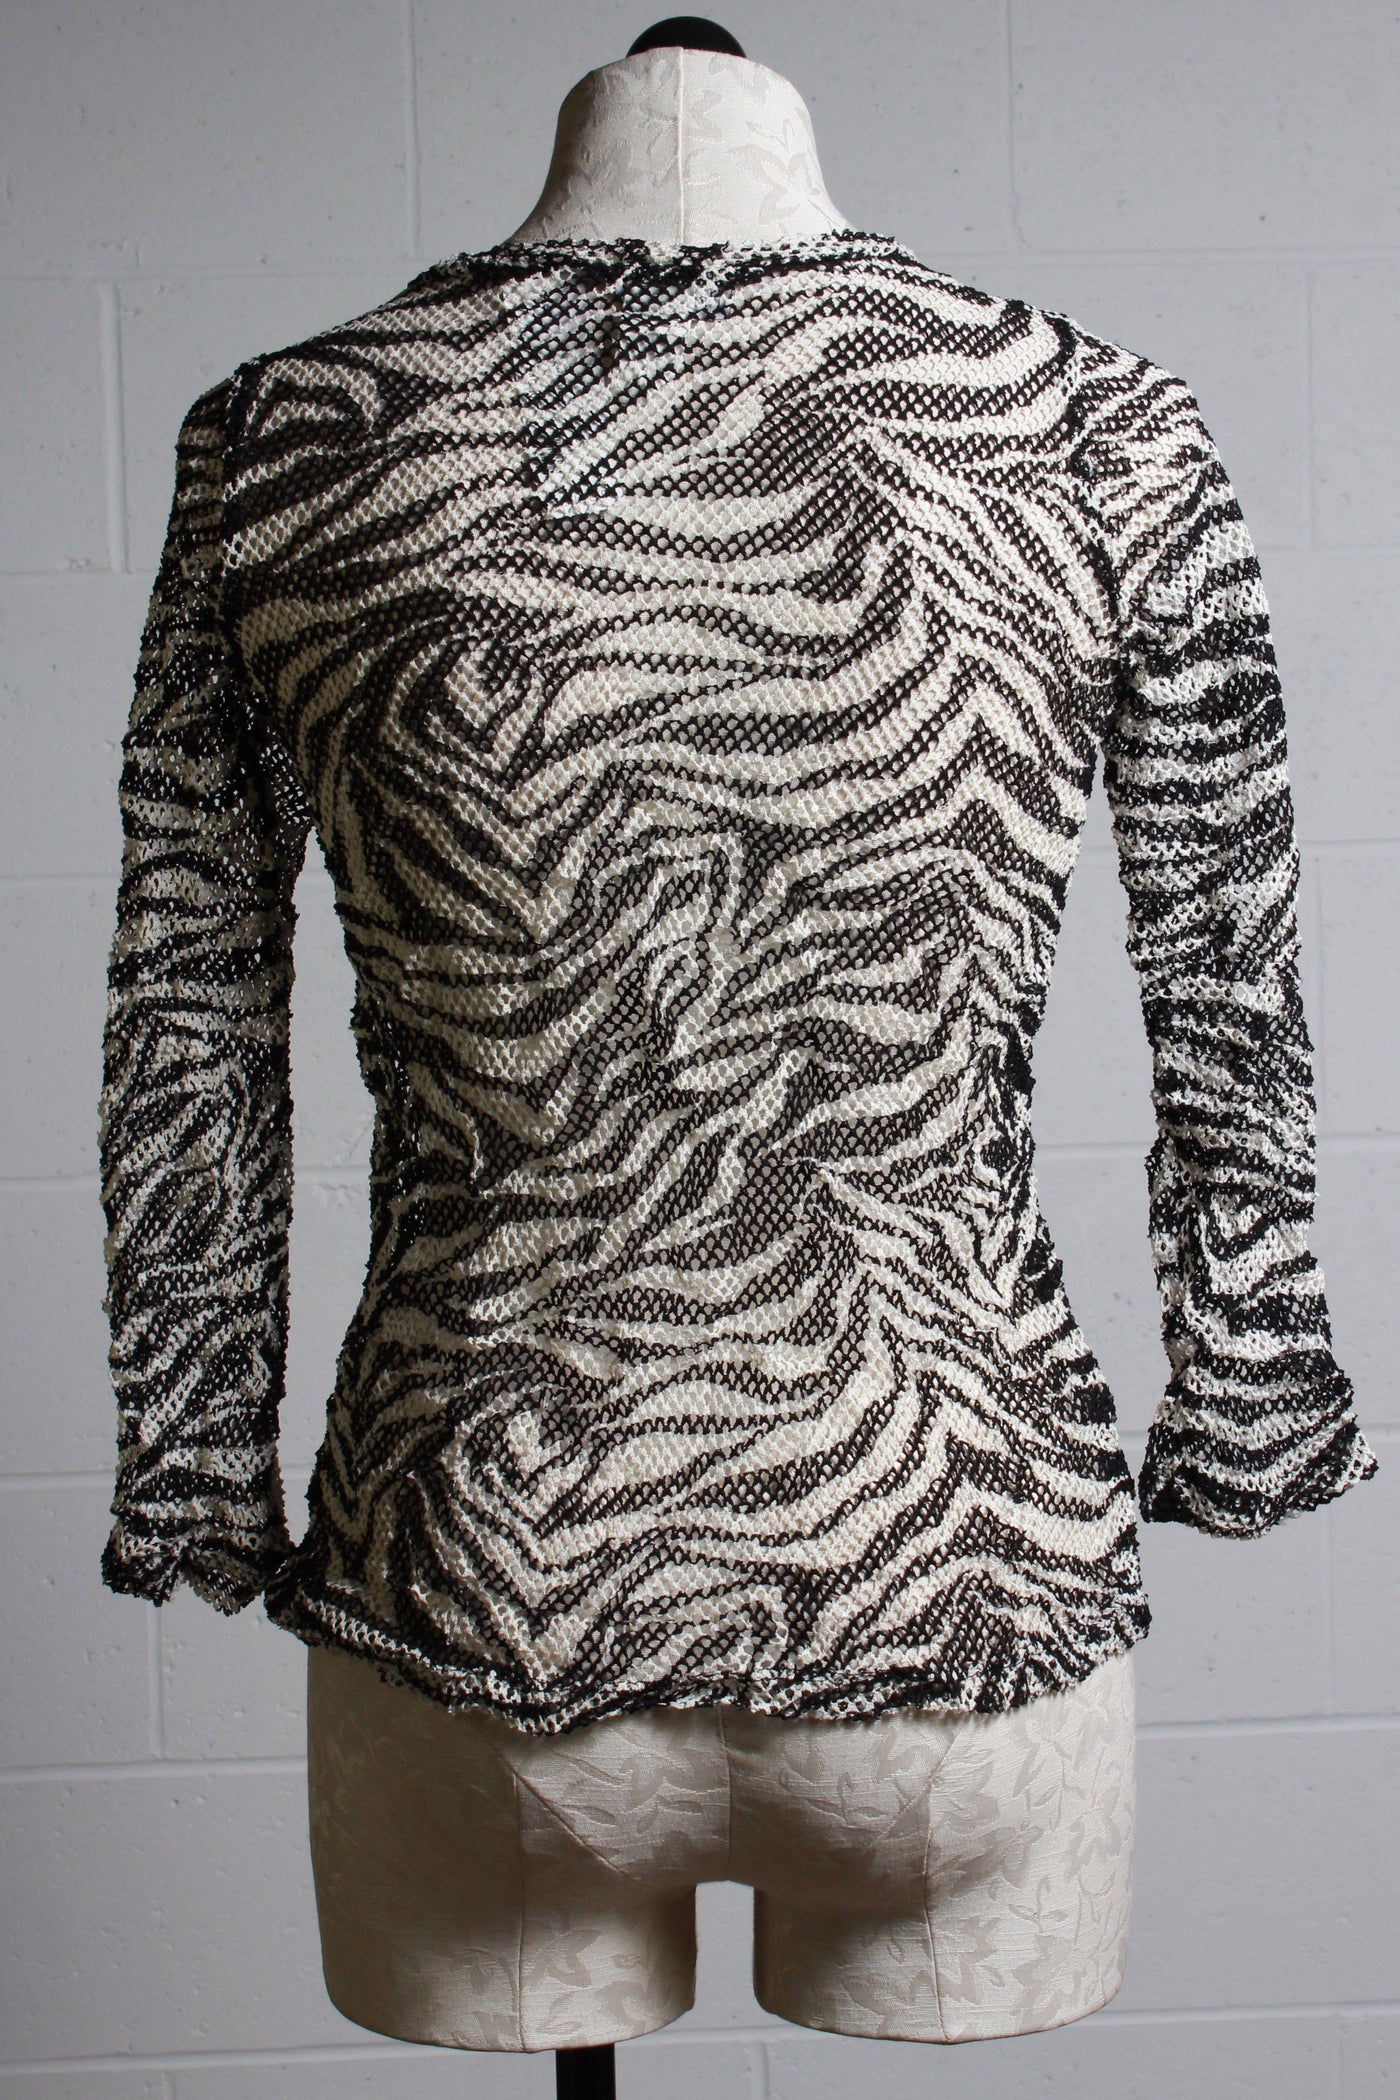 back view of black and white zebra print mesh tee shirt